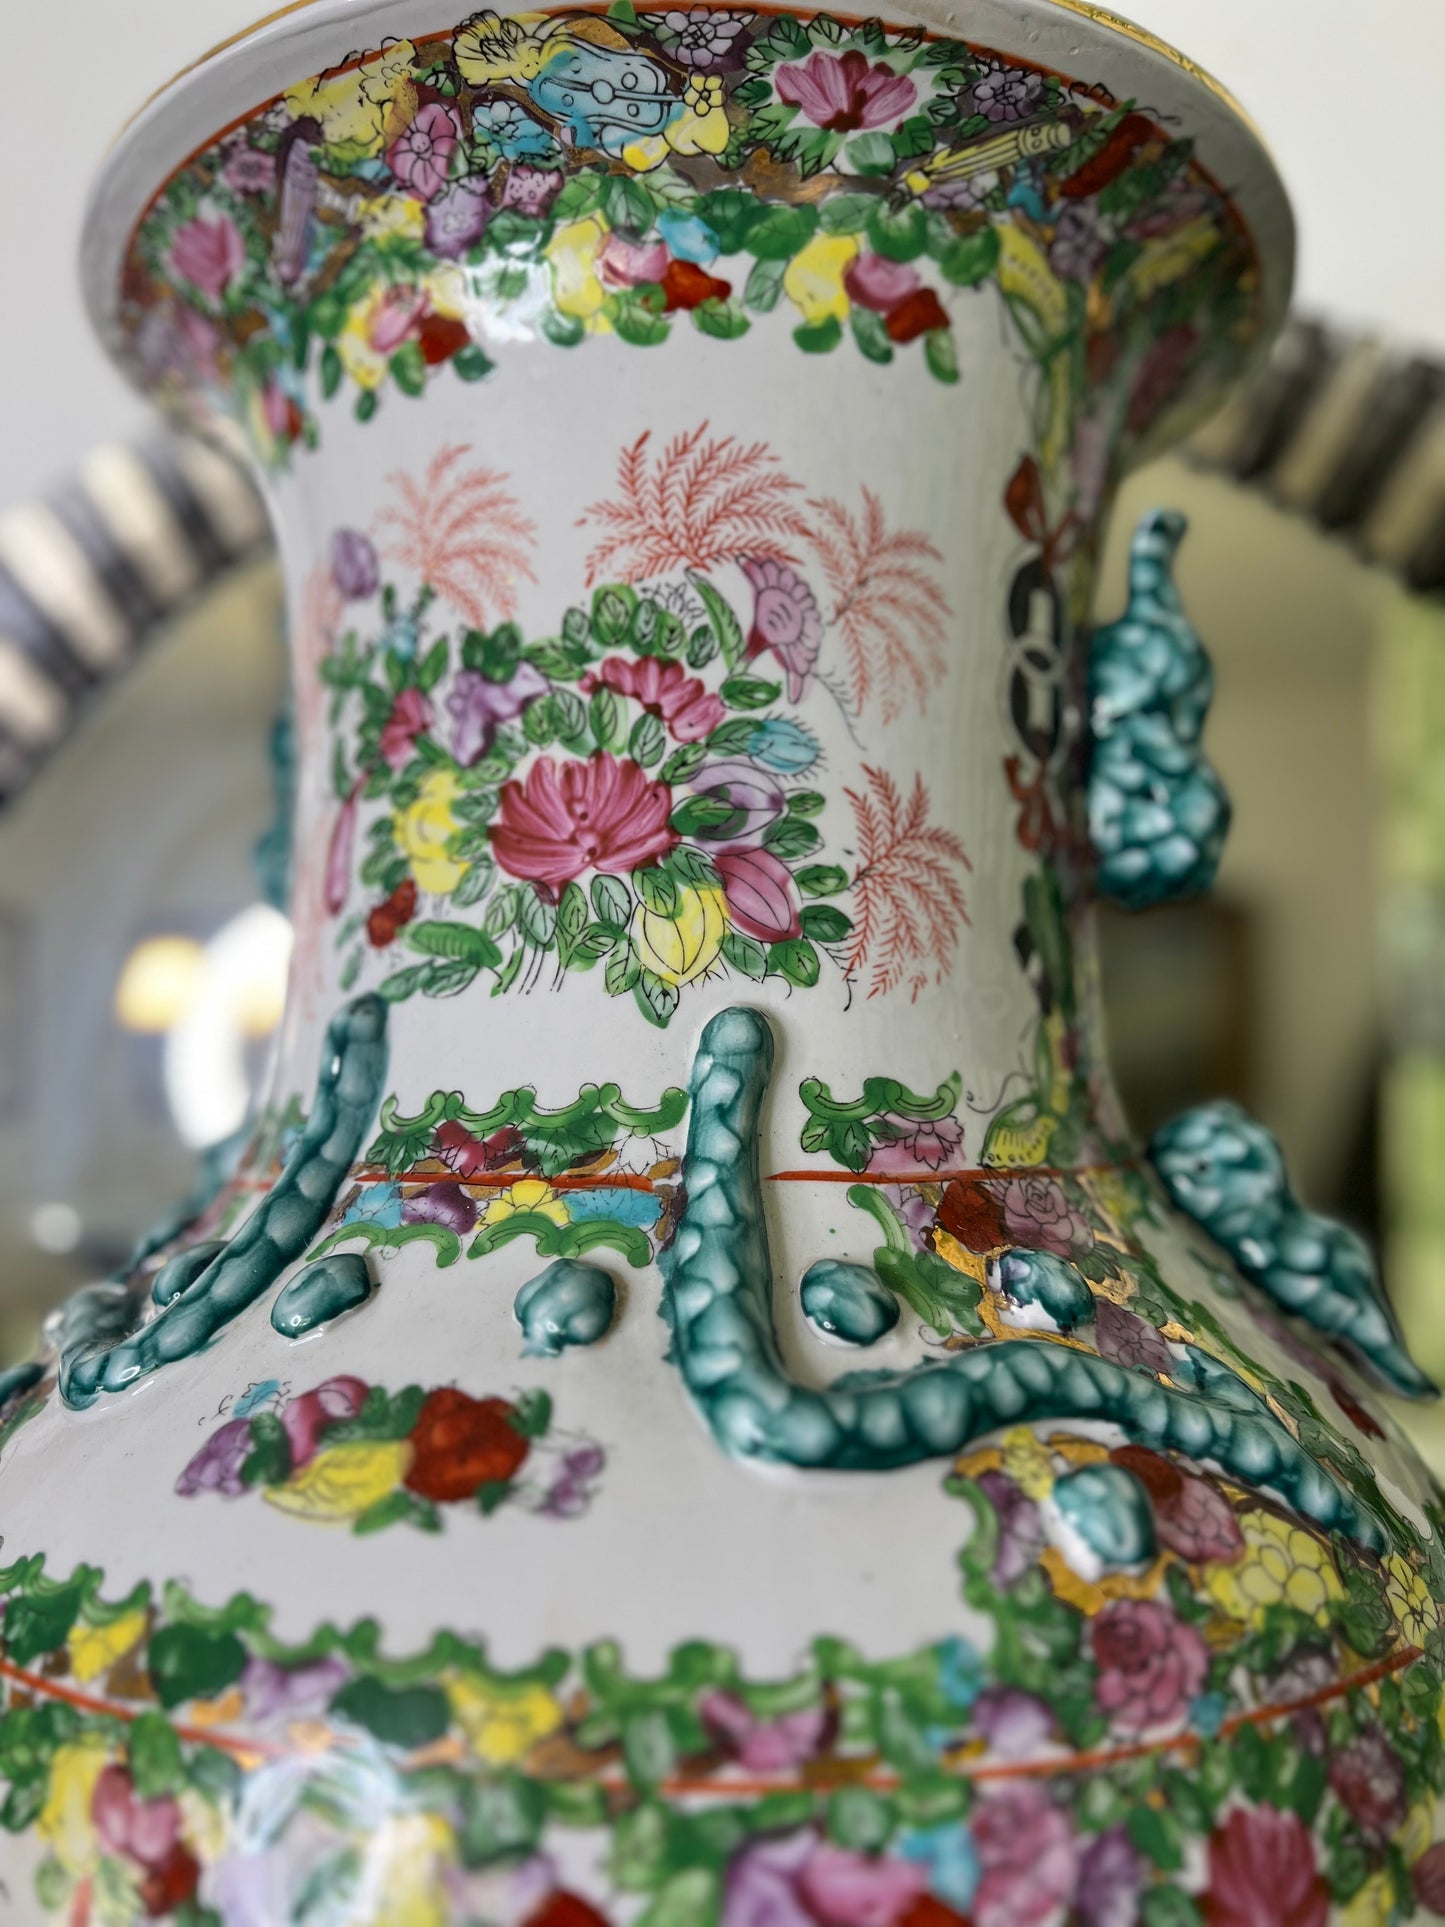 Massive 36” Famille Rose Palace Floor Vase